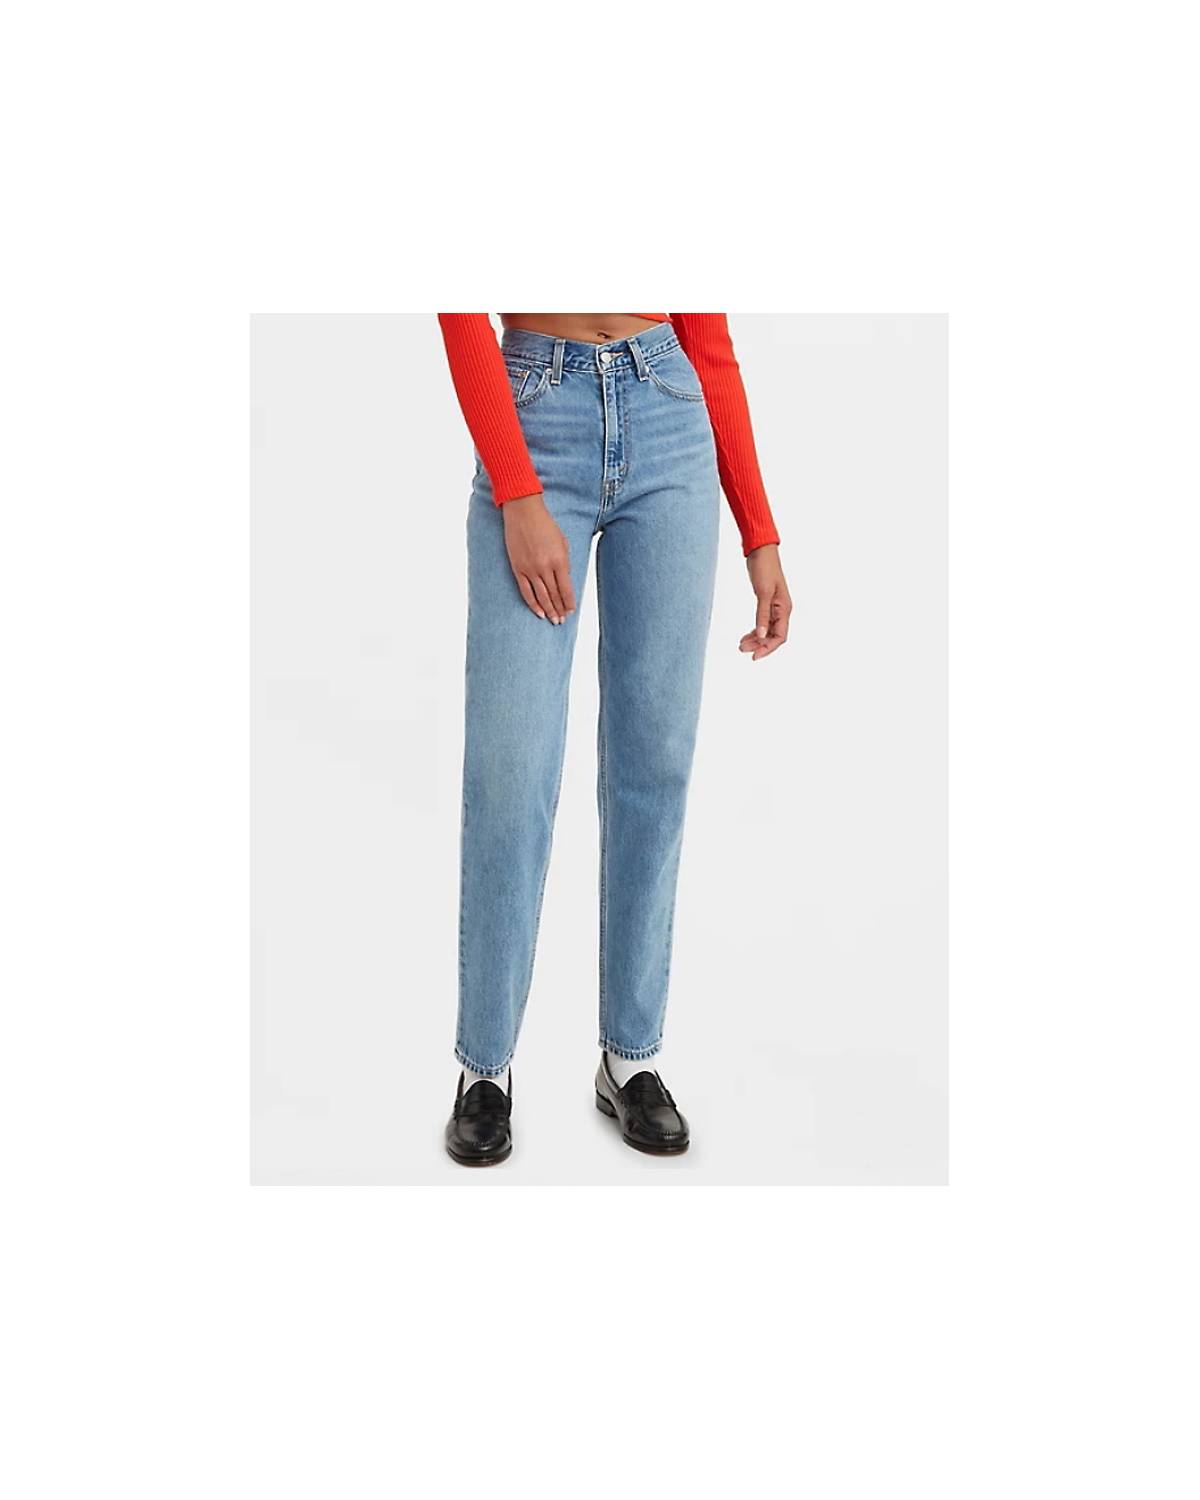 Women's Bootcut 100% Cotton Jeans